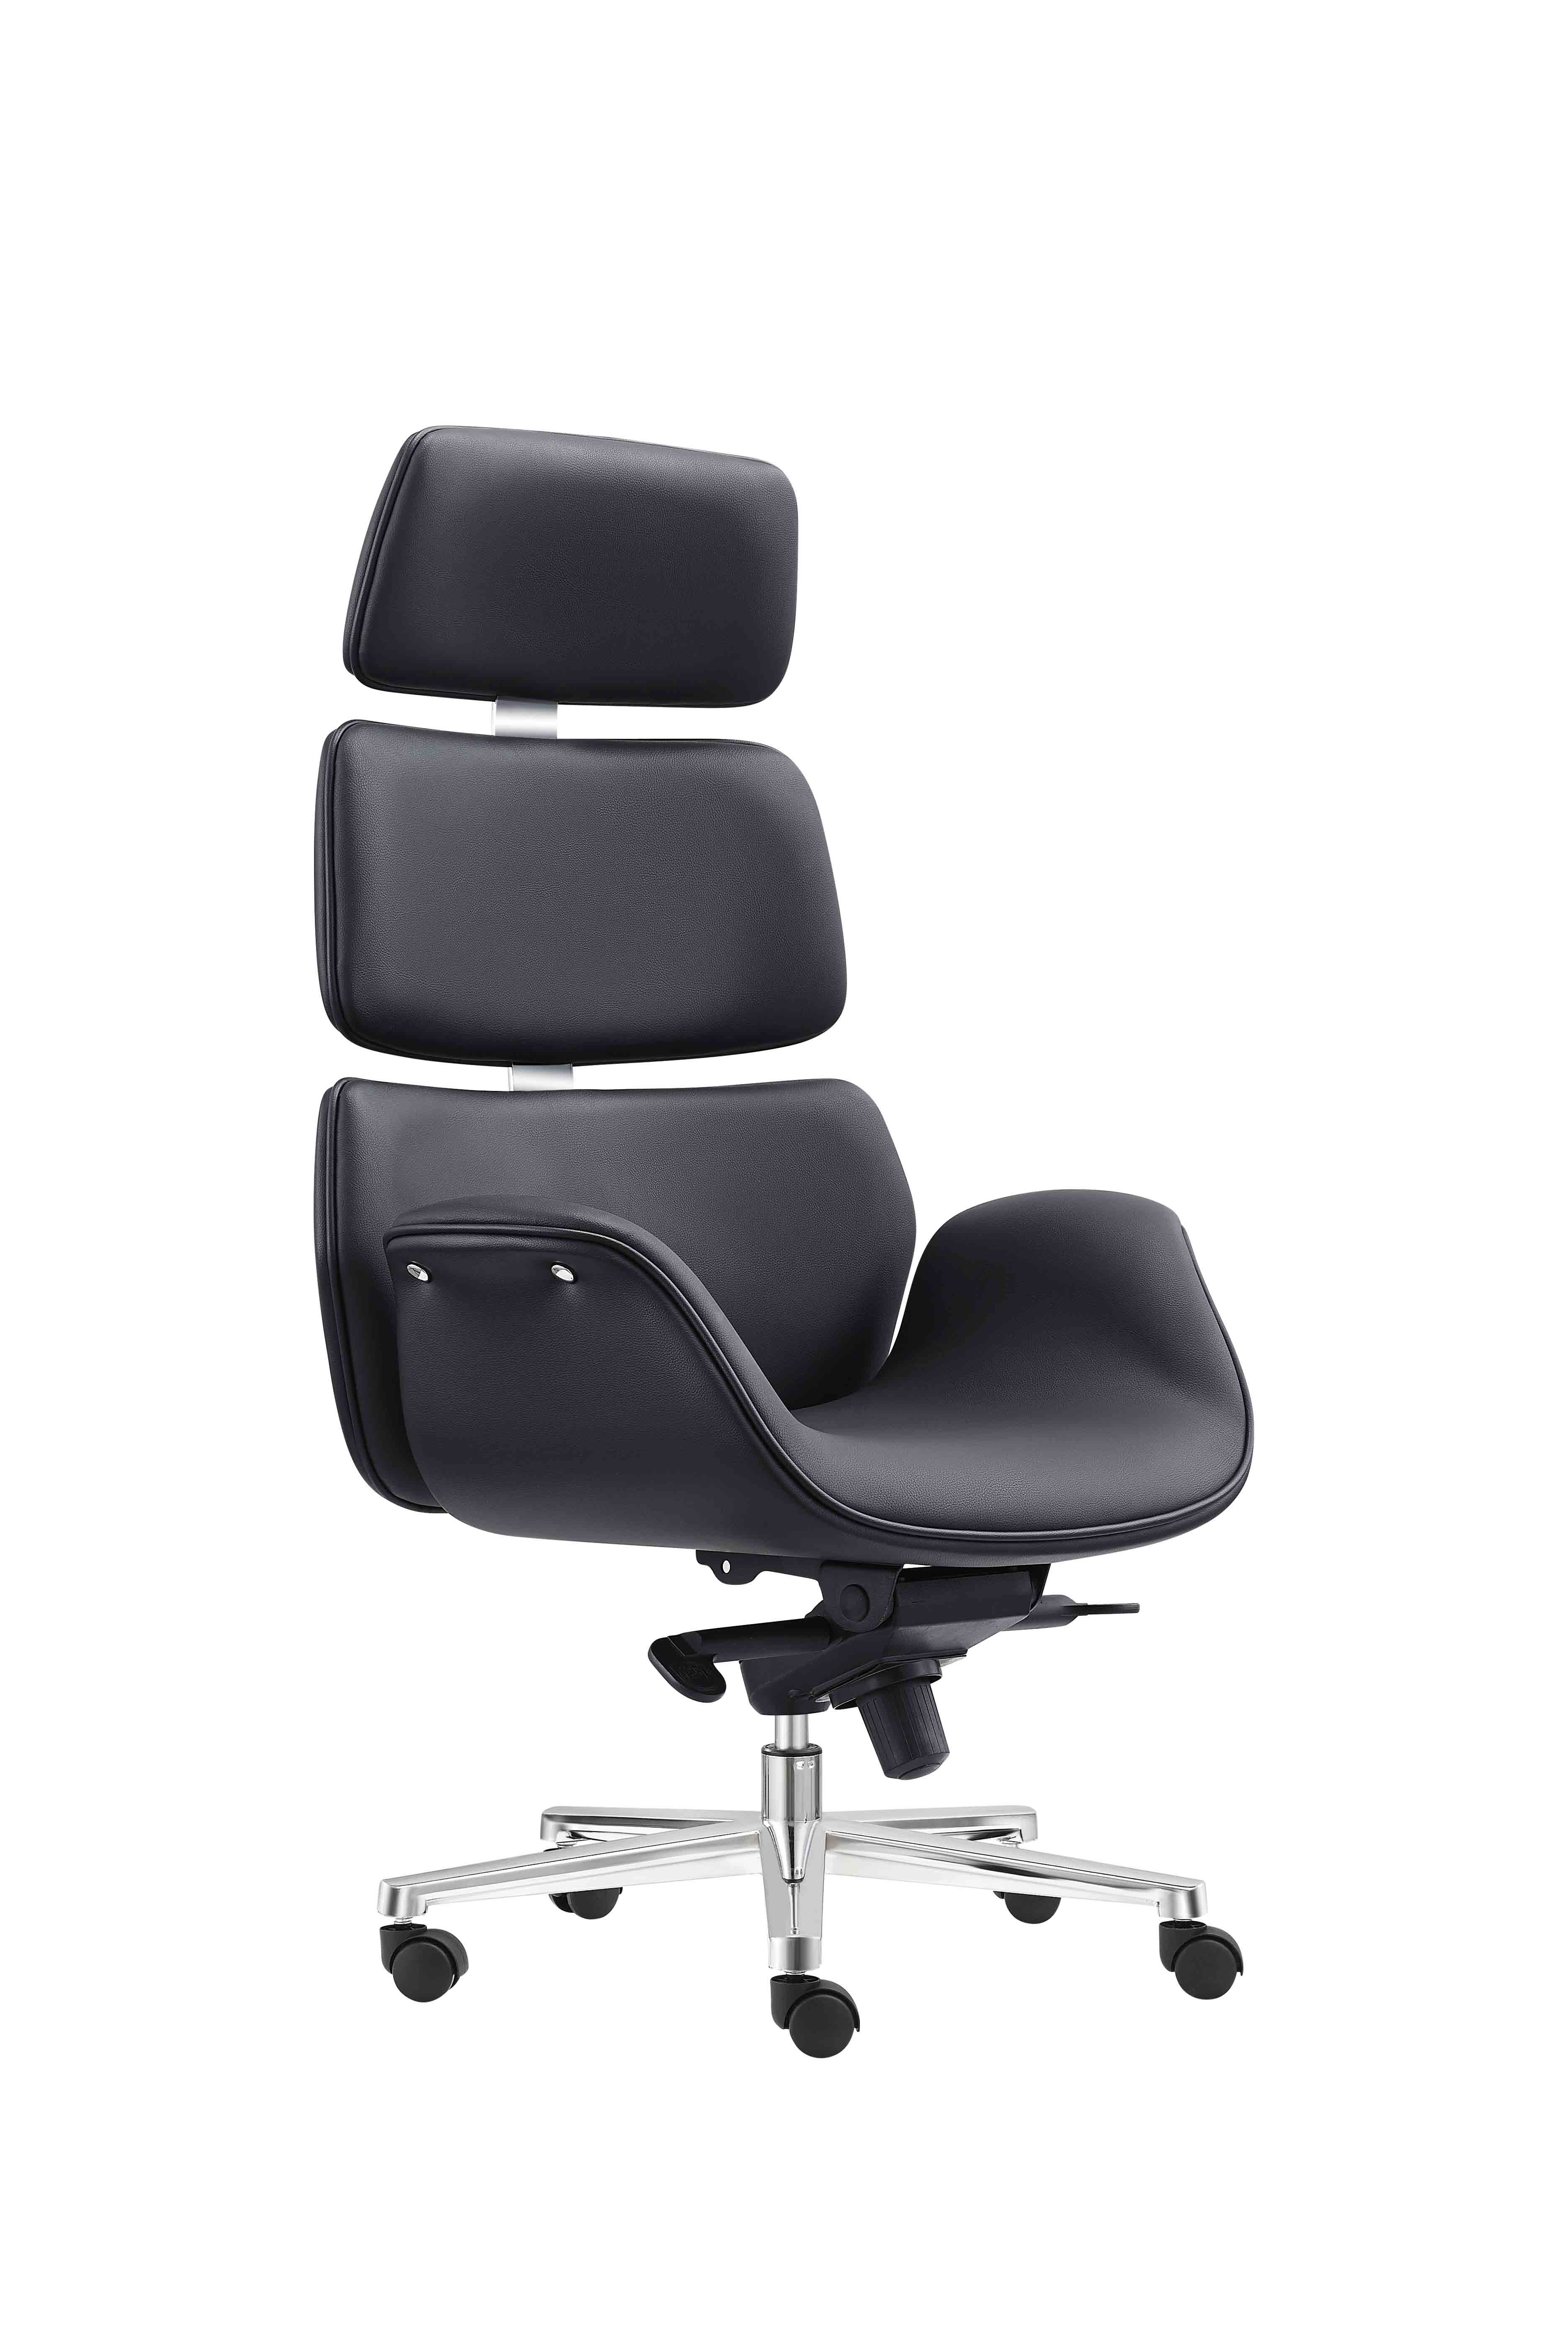 Best Executive Office Chair(DU-1961H)